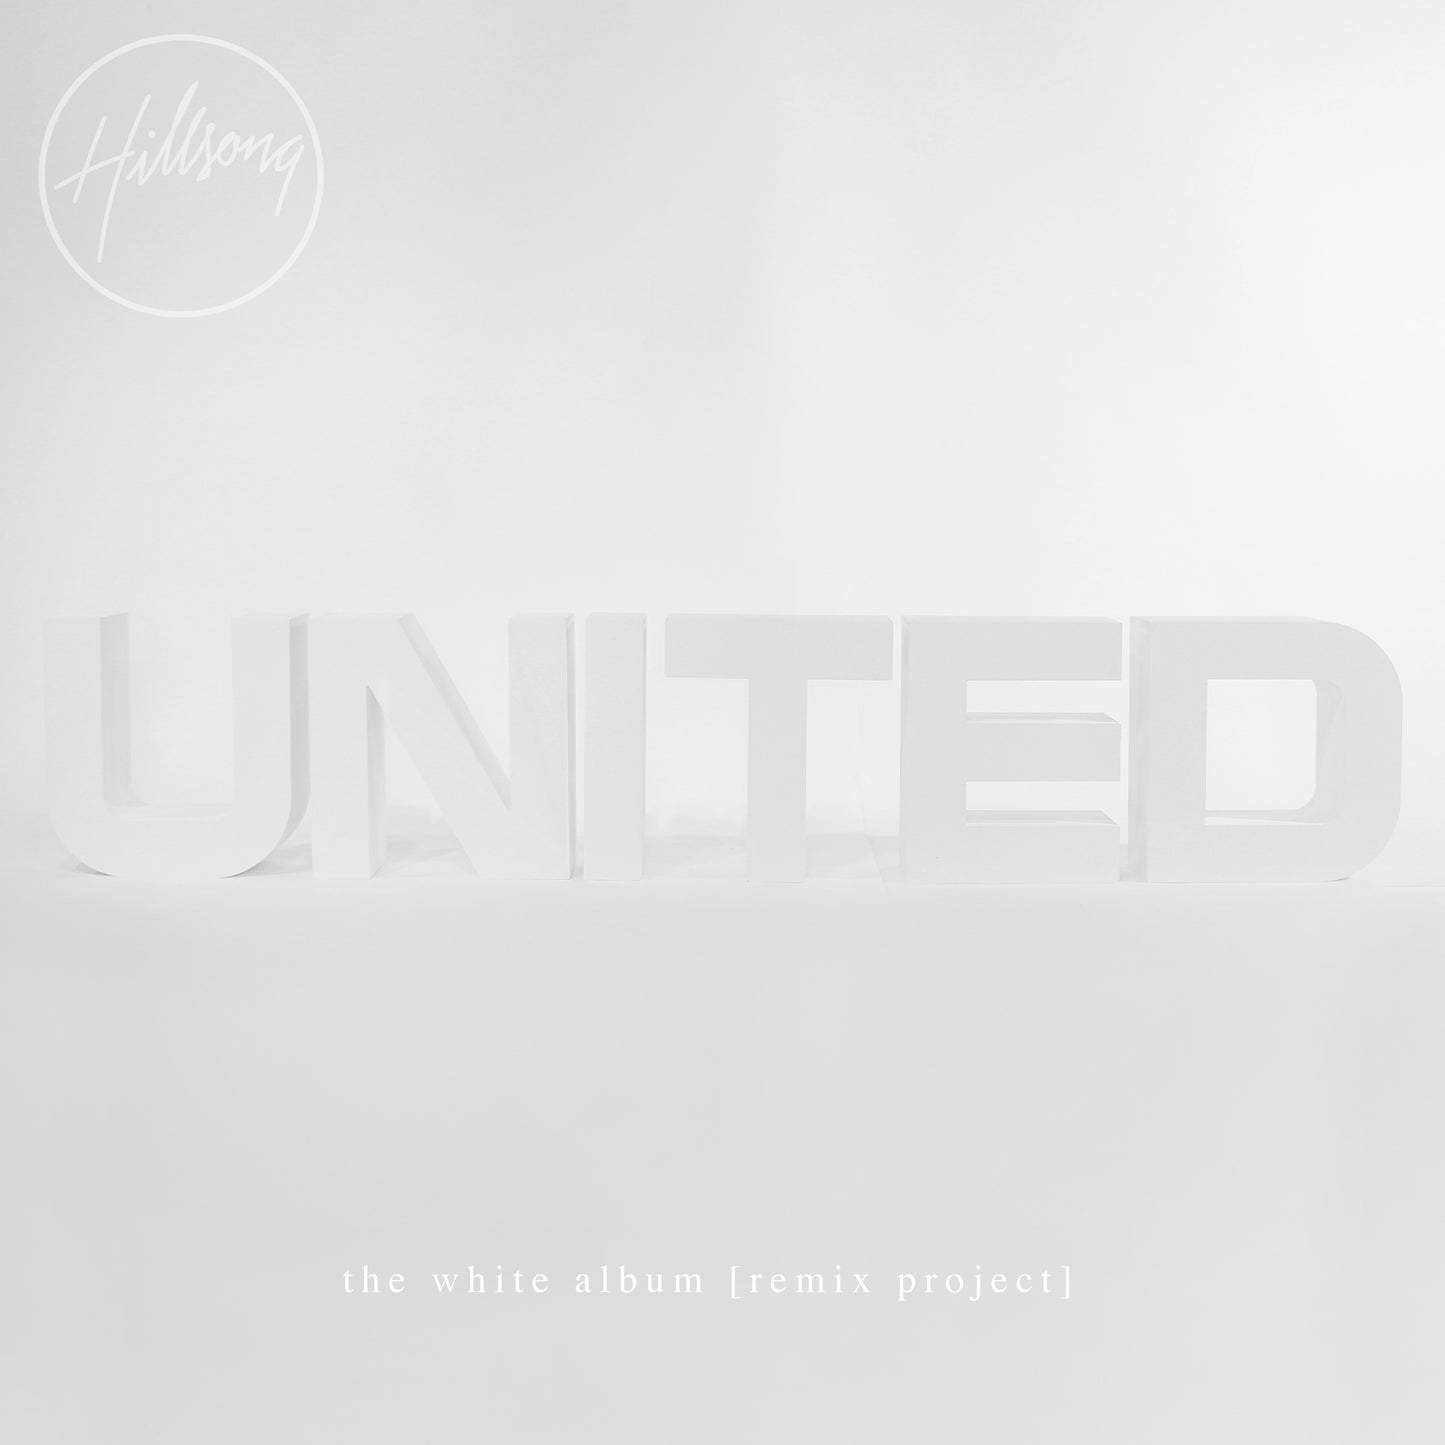 The White Album [Remix Project] Digital Audio